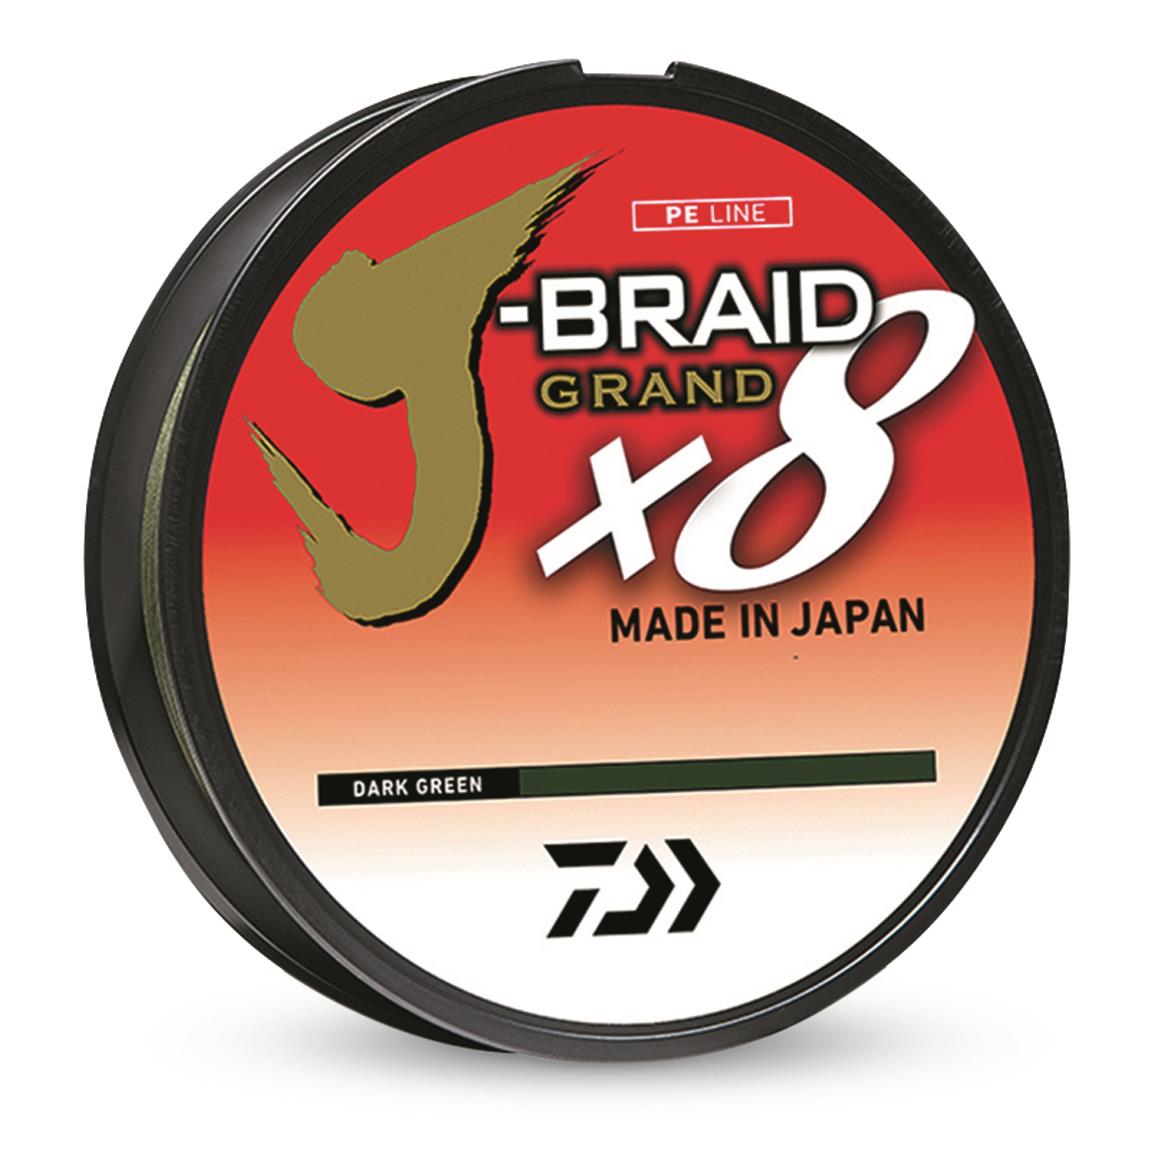 Daiwa J-Braid x8 Grand Braided Line, 300 Yards, Dark Green